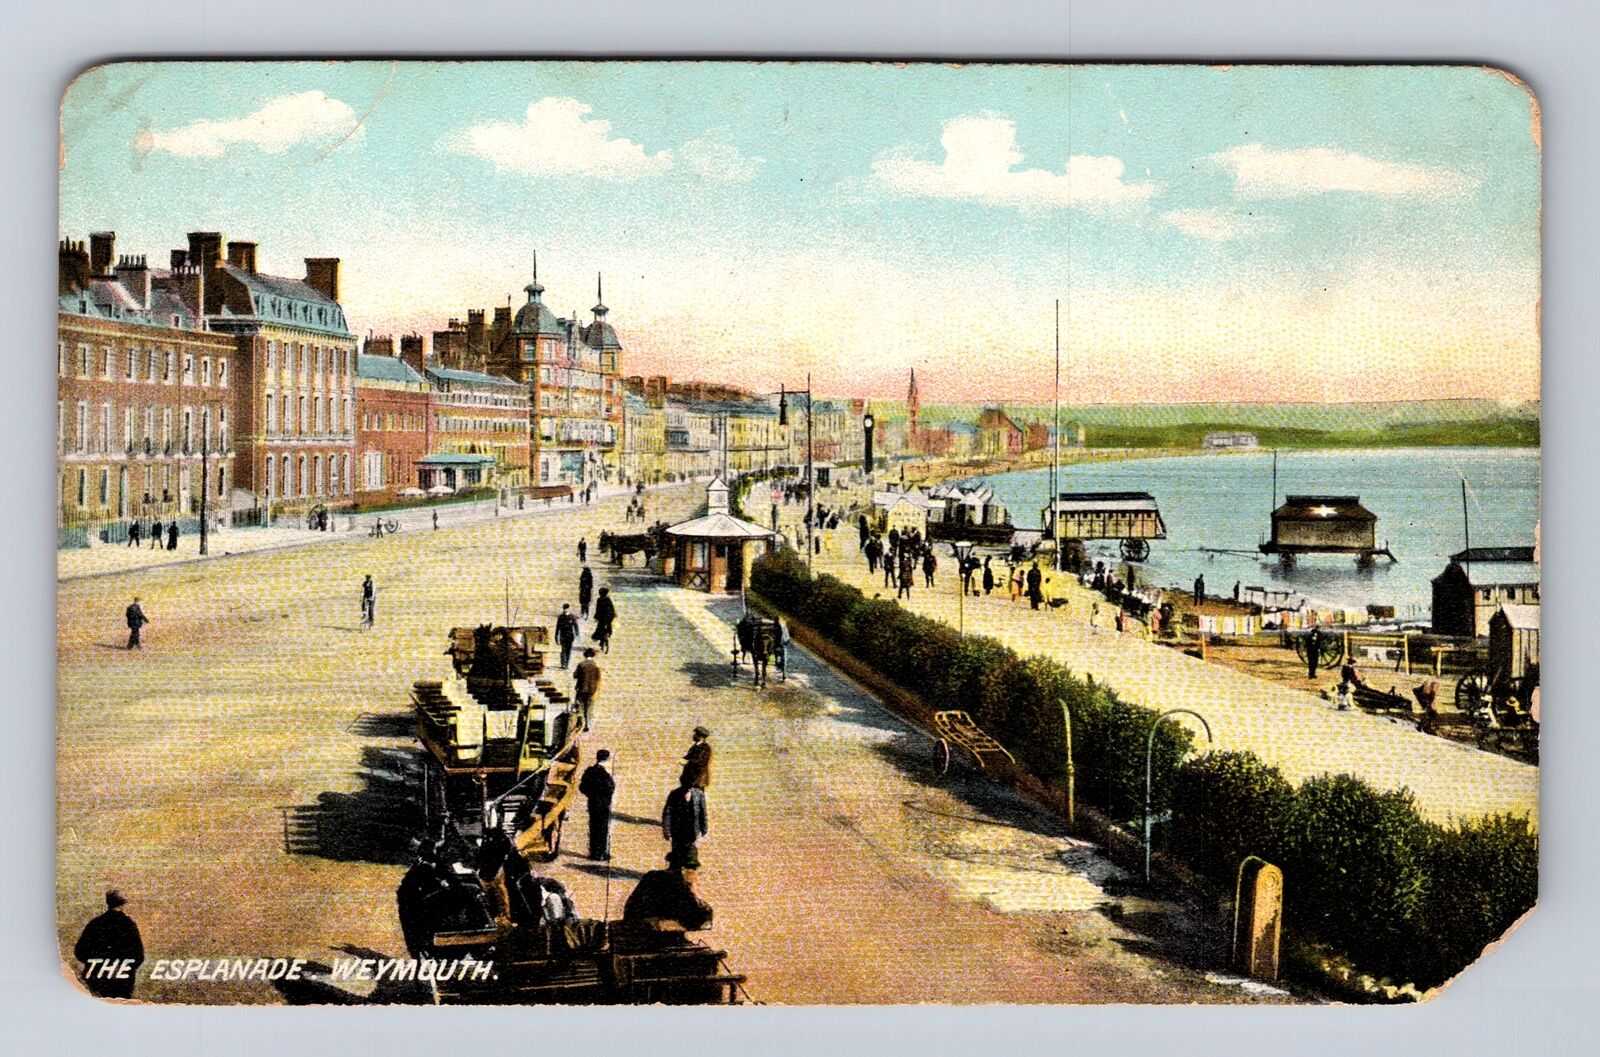 Weymouth England, The Esplanade, Vintage Card Travel Souvenir History Postcard